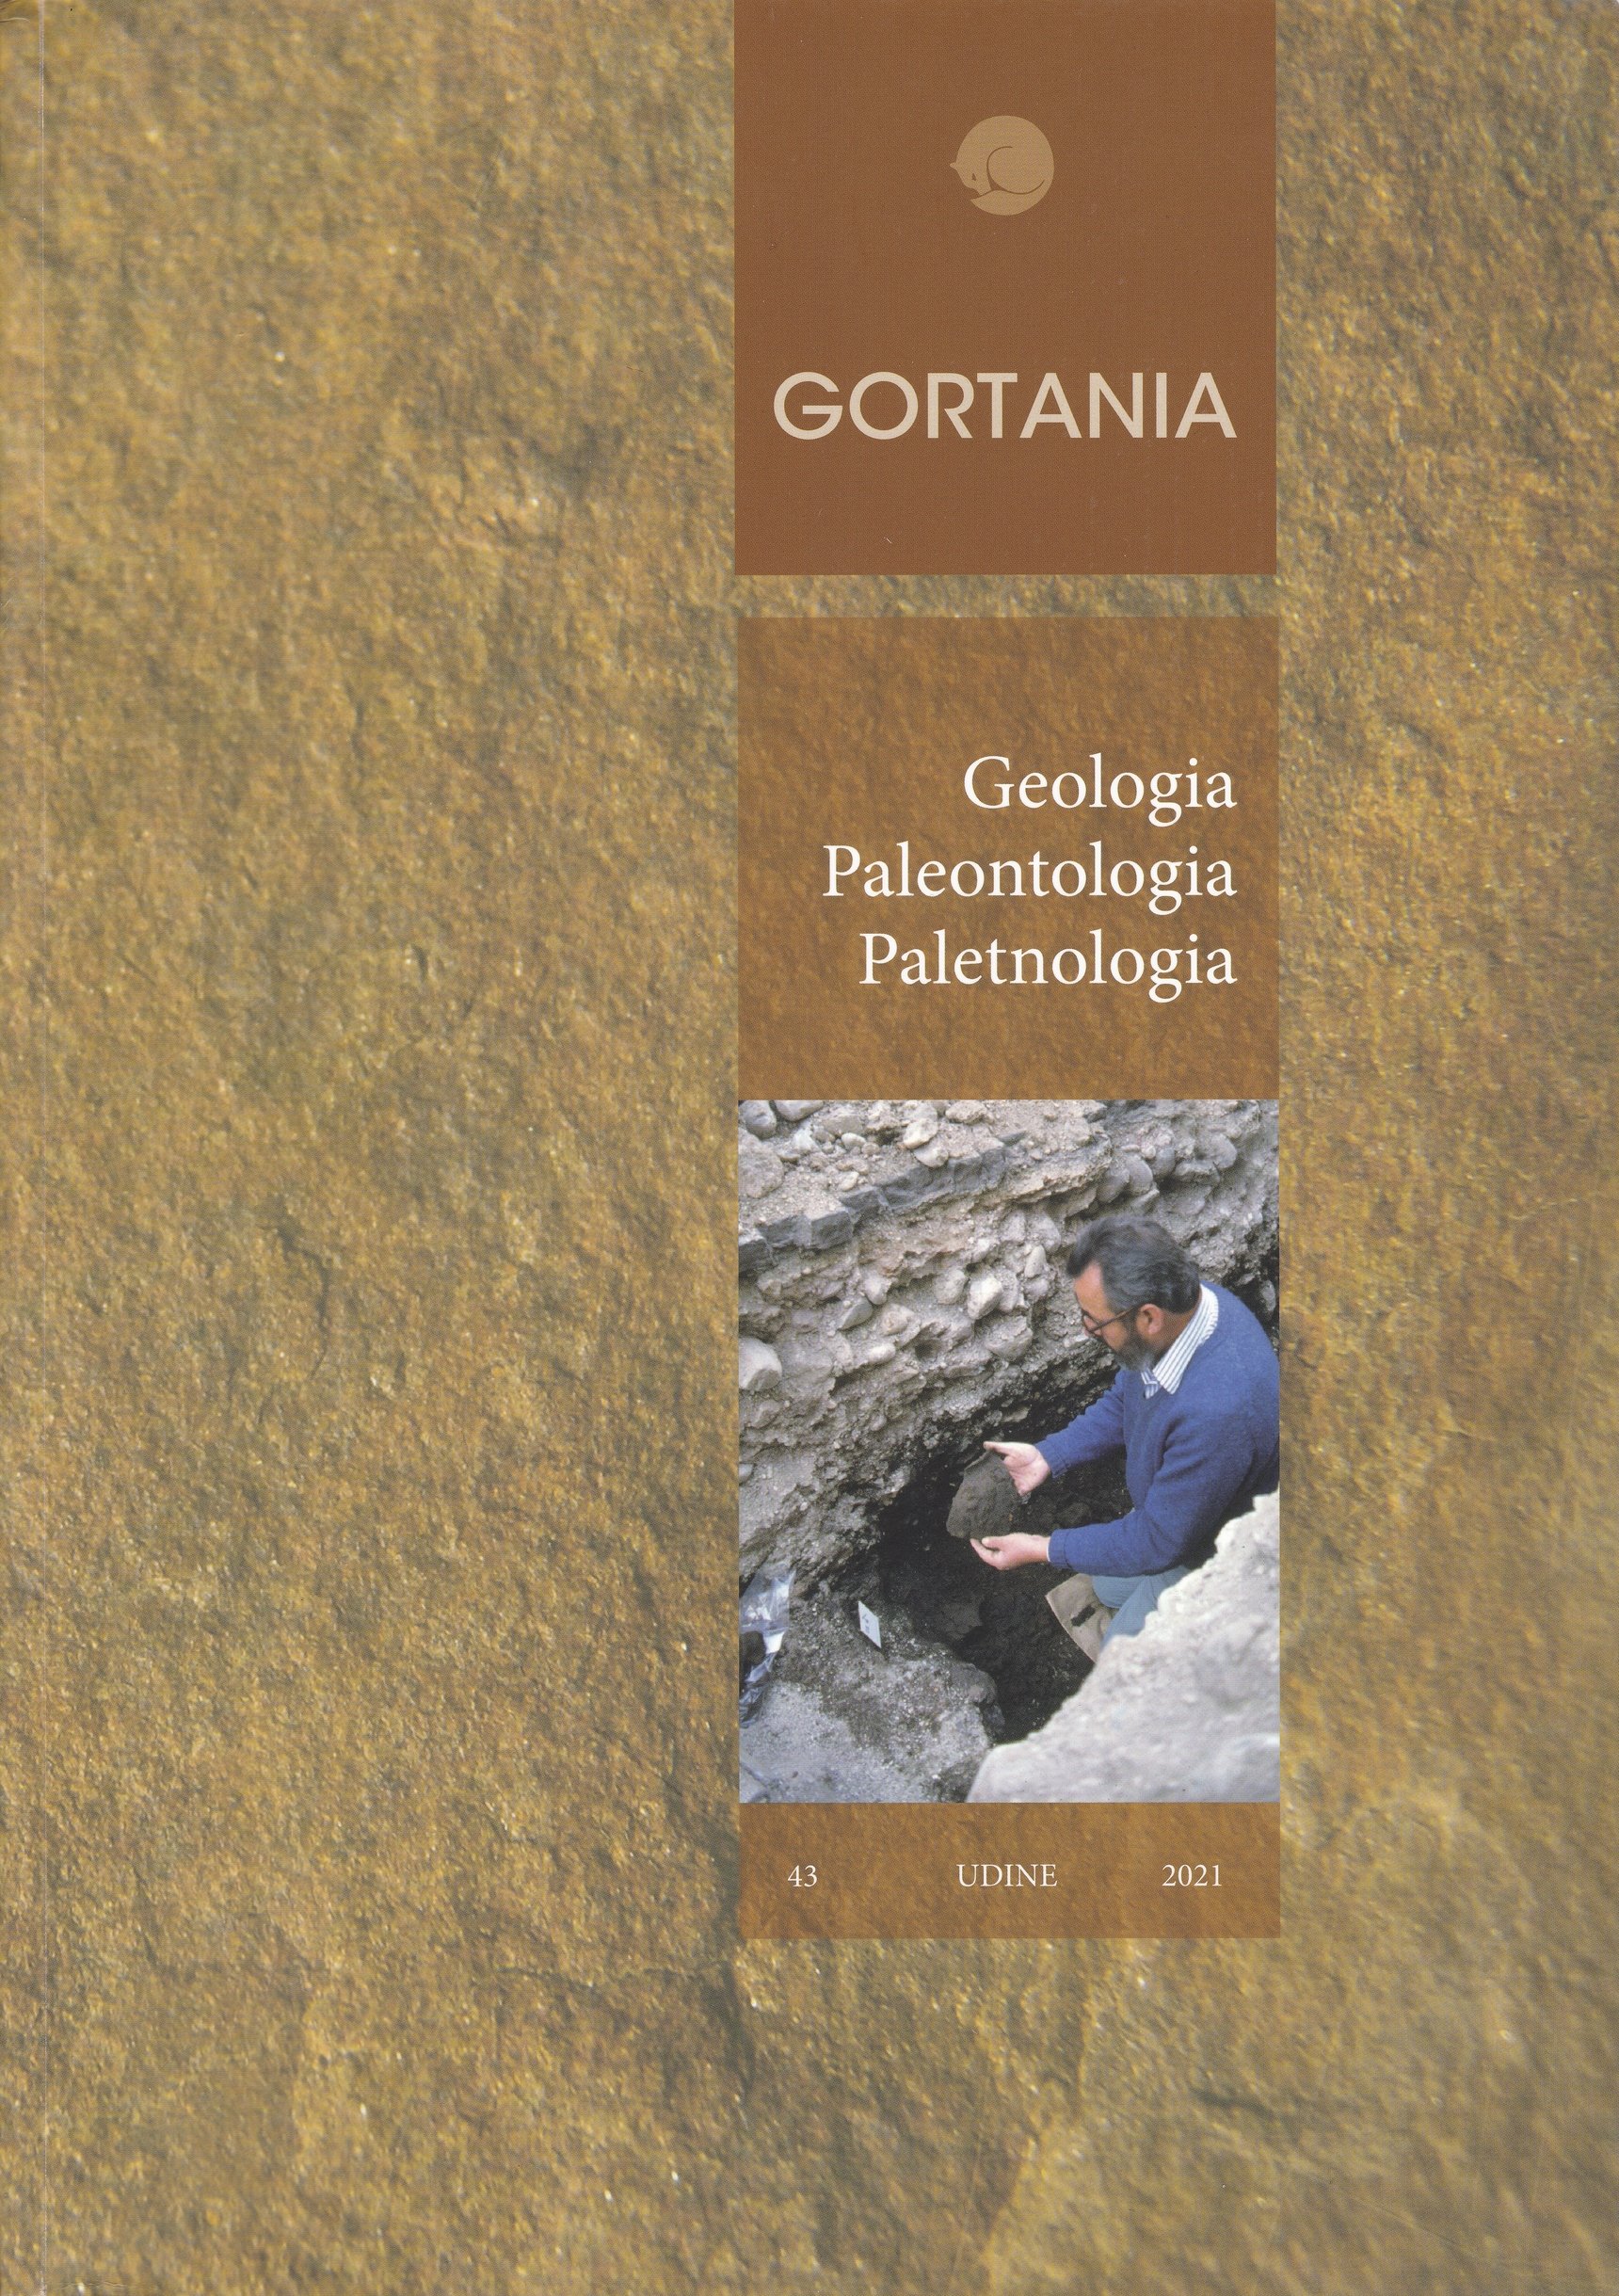 Gortania. Atti del Museo Friulano di Storia Naturale. Geologia, Paleontologia, Paletnologia 2021/43. (Rippl-Rónai Múzeum CC BY-NC-ND)